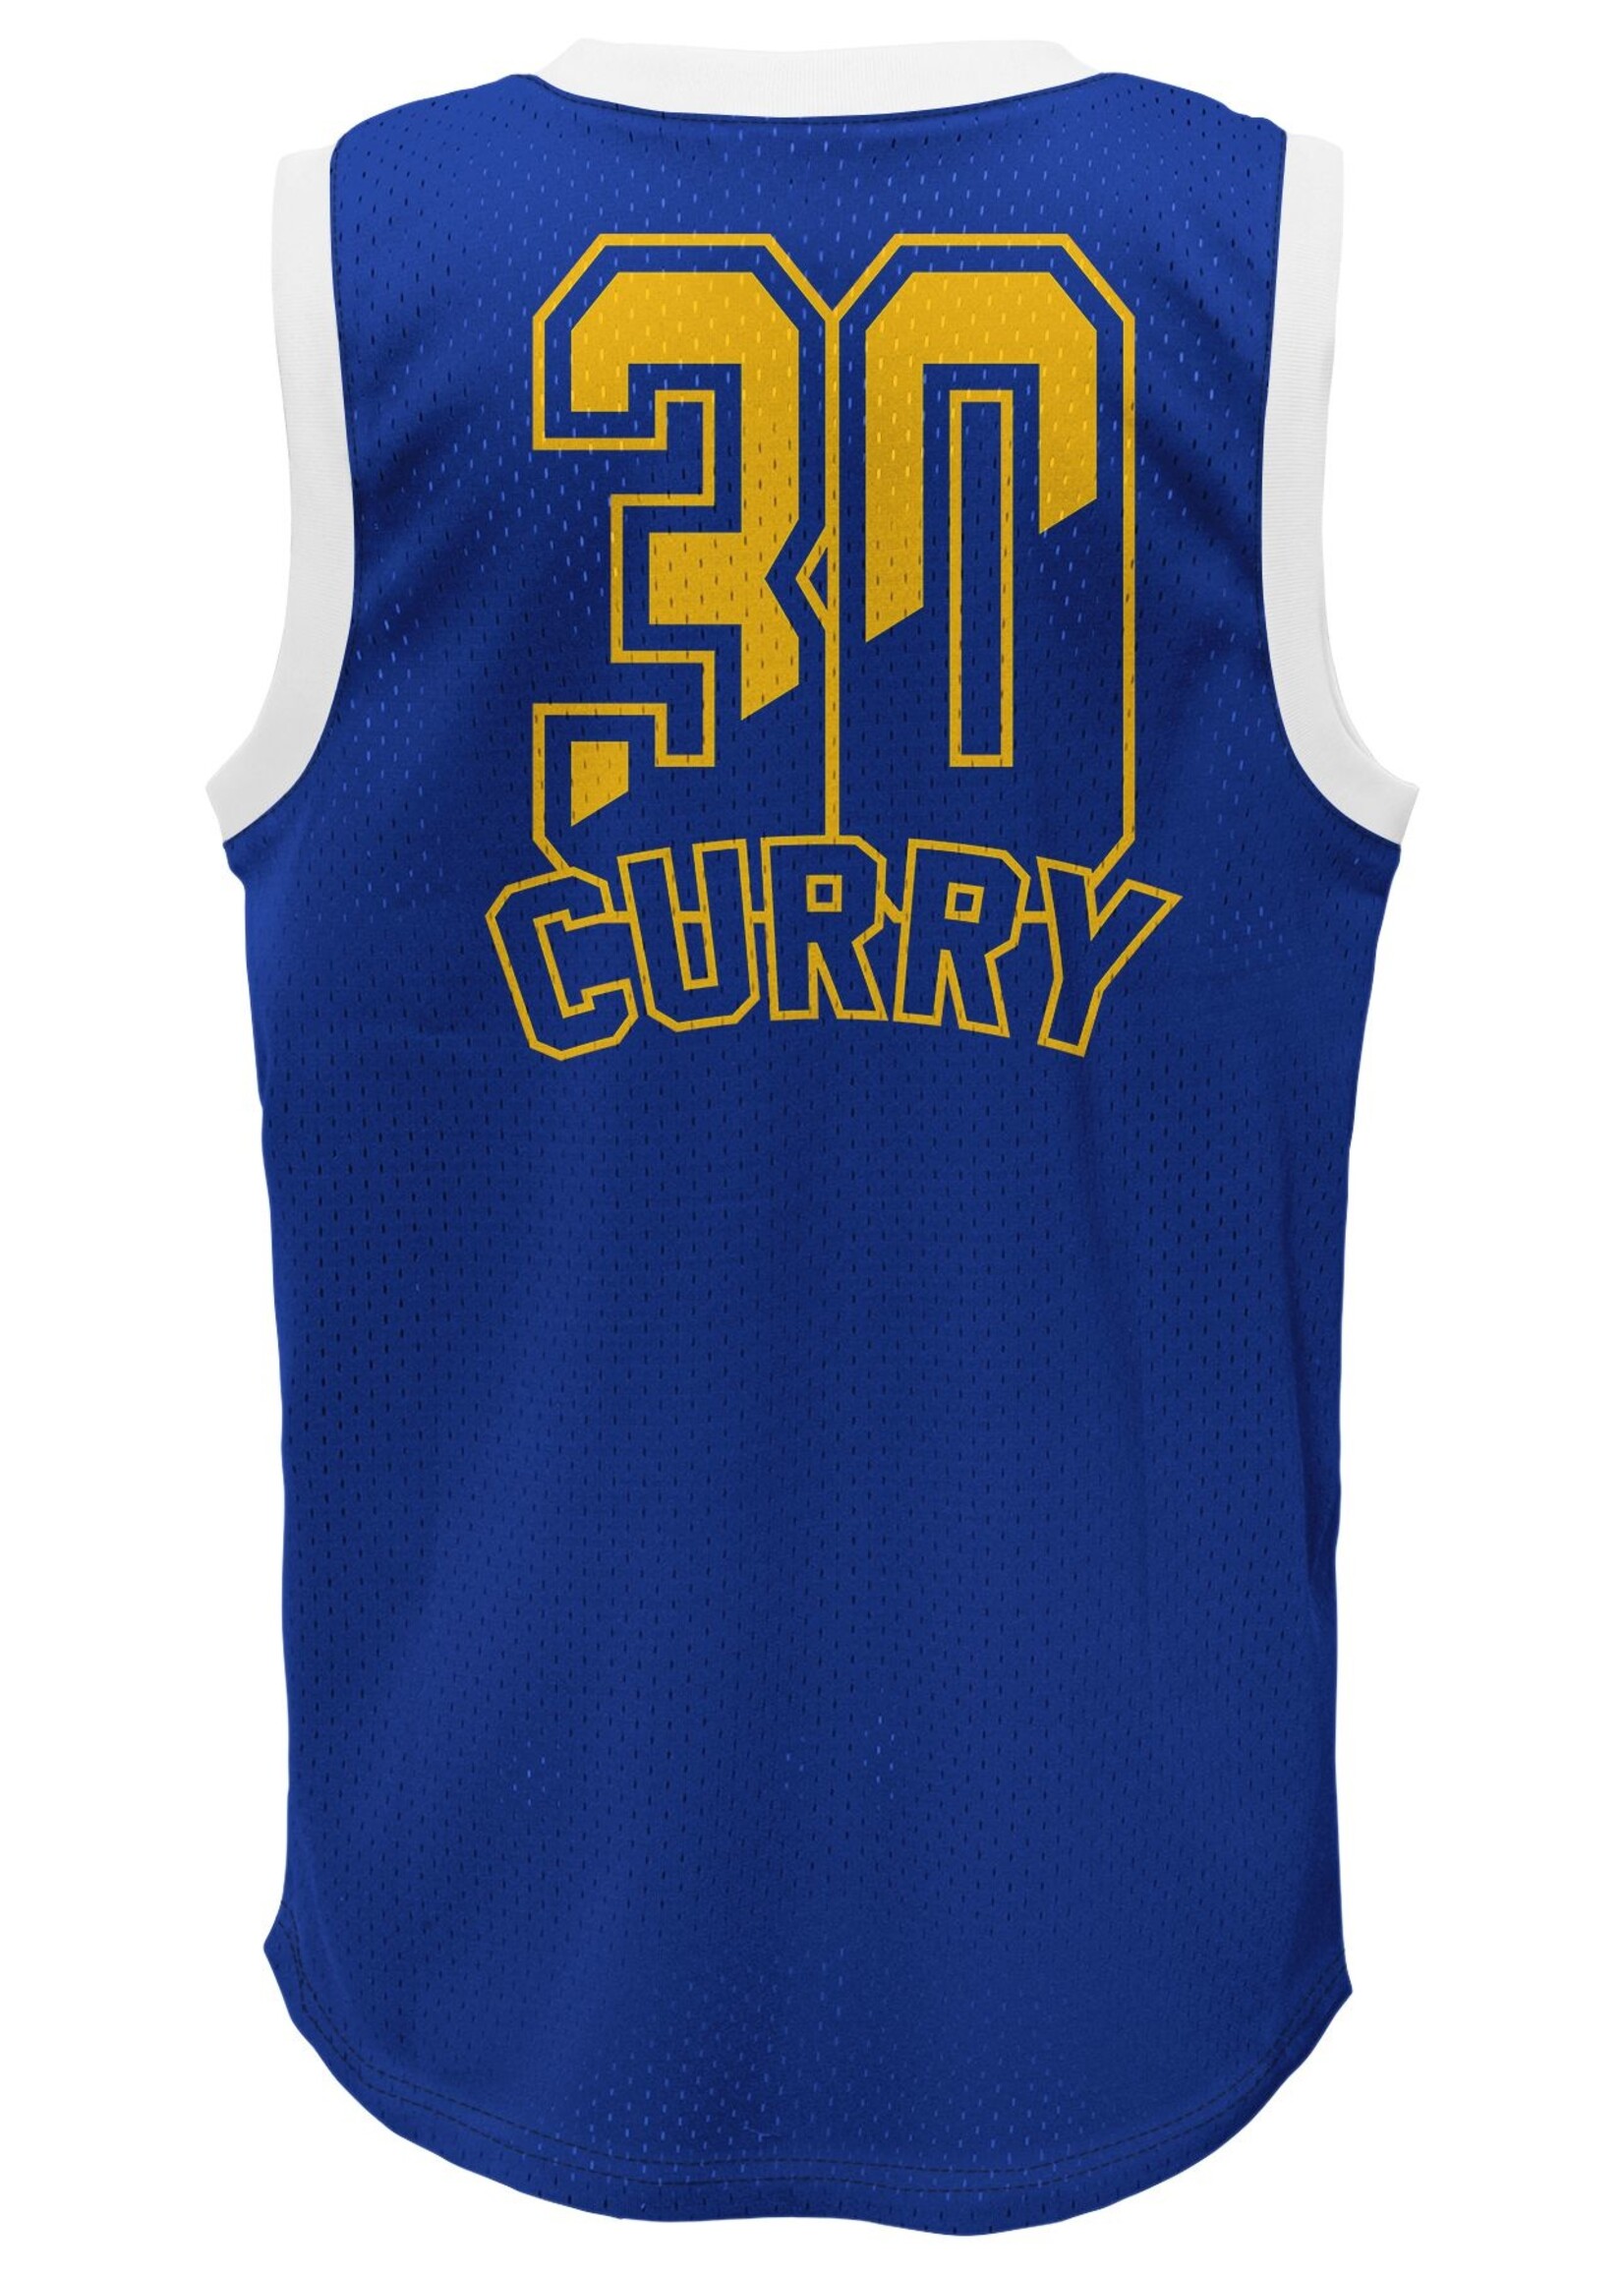 Outerstuff NBA Steph Curry Maillot Bleu (Logo Poitrine)